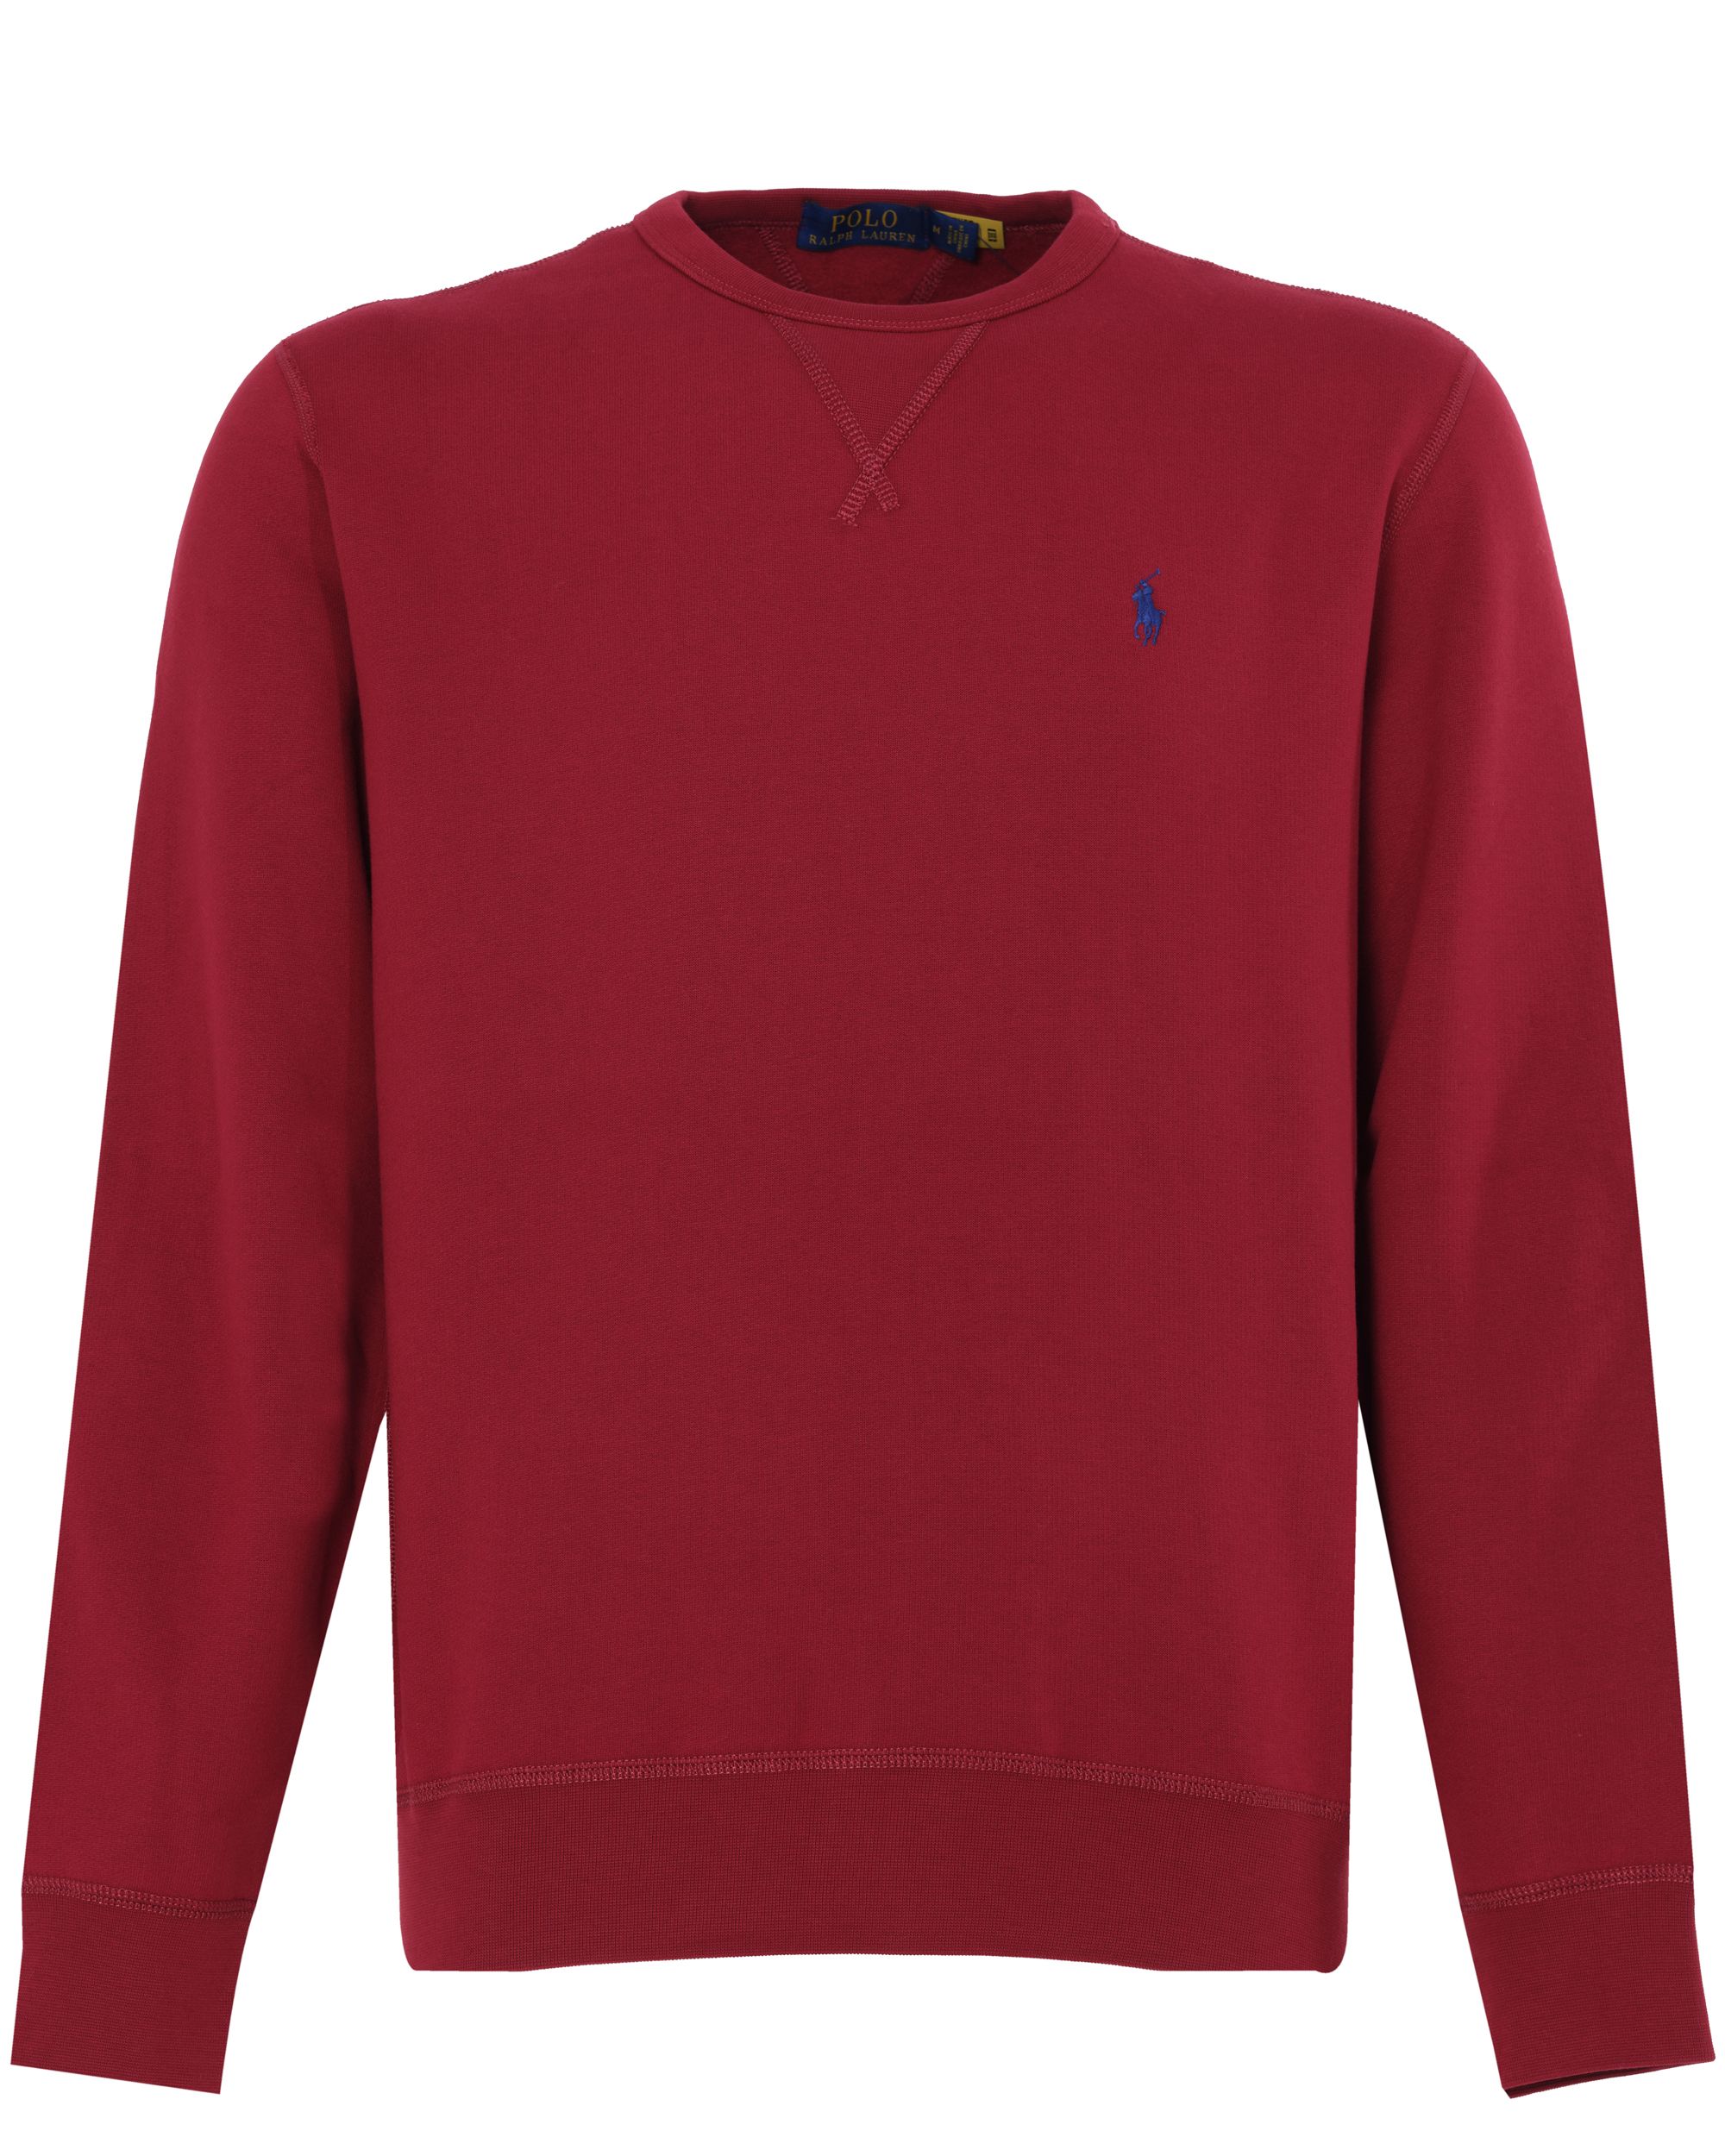 Polo Ralph Lauren Sweater Rood 080567-001-L